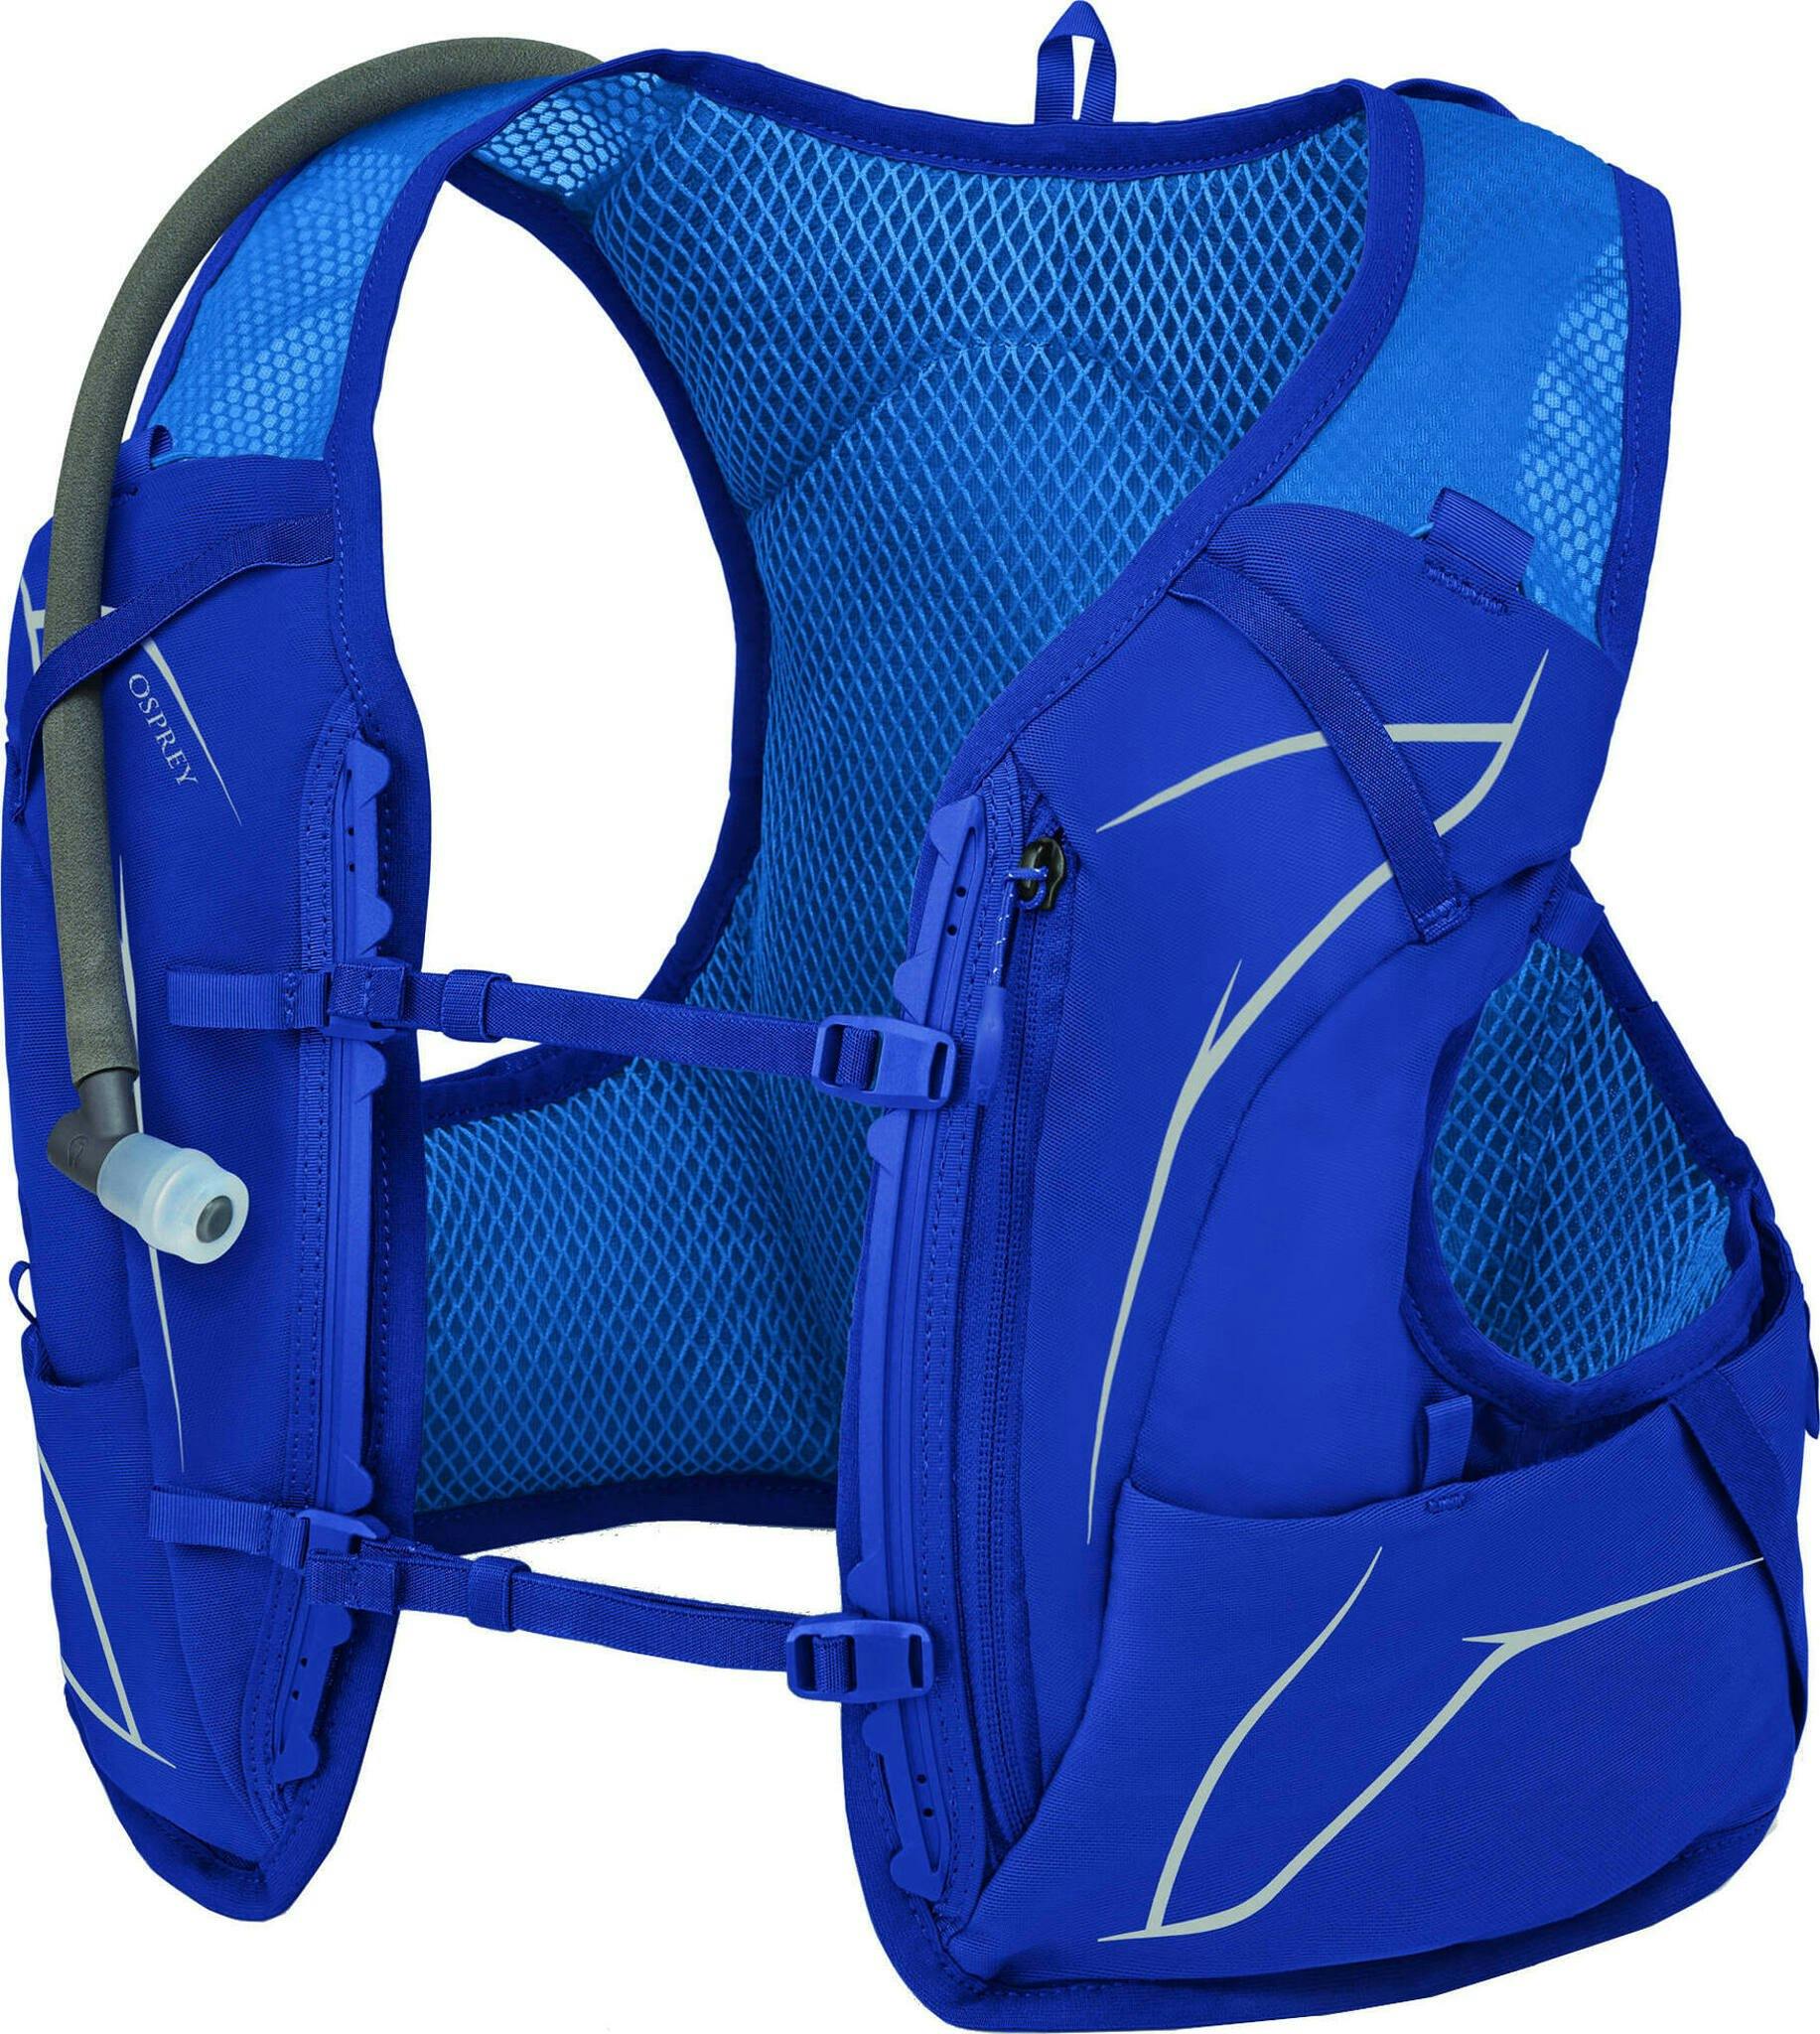 Product image for Duro Hydration Vest 1.5L - Men's